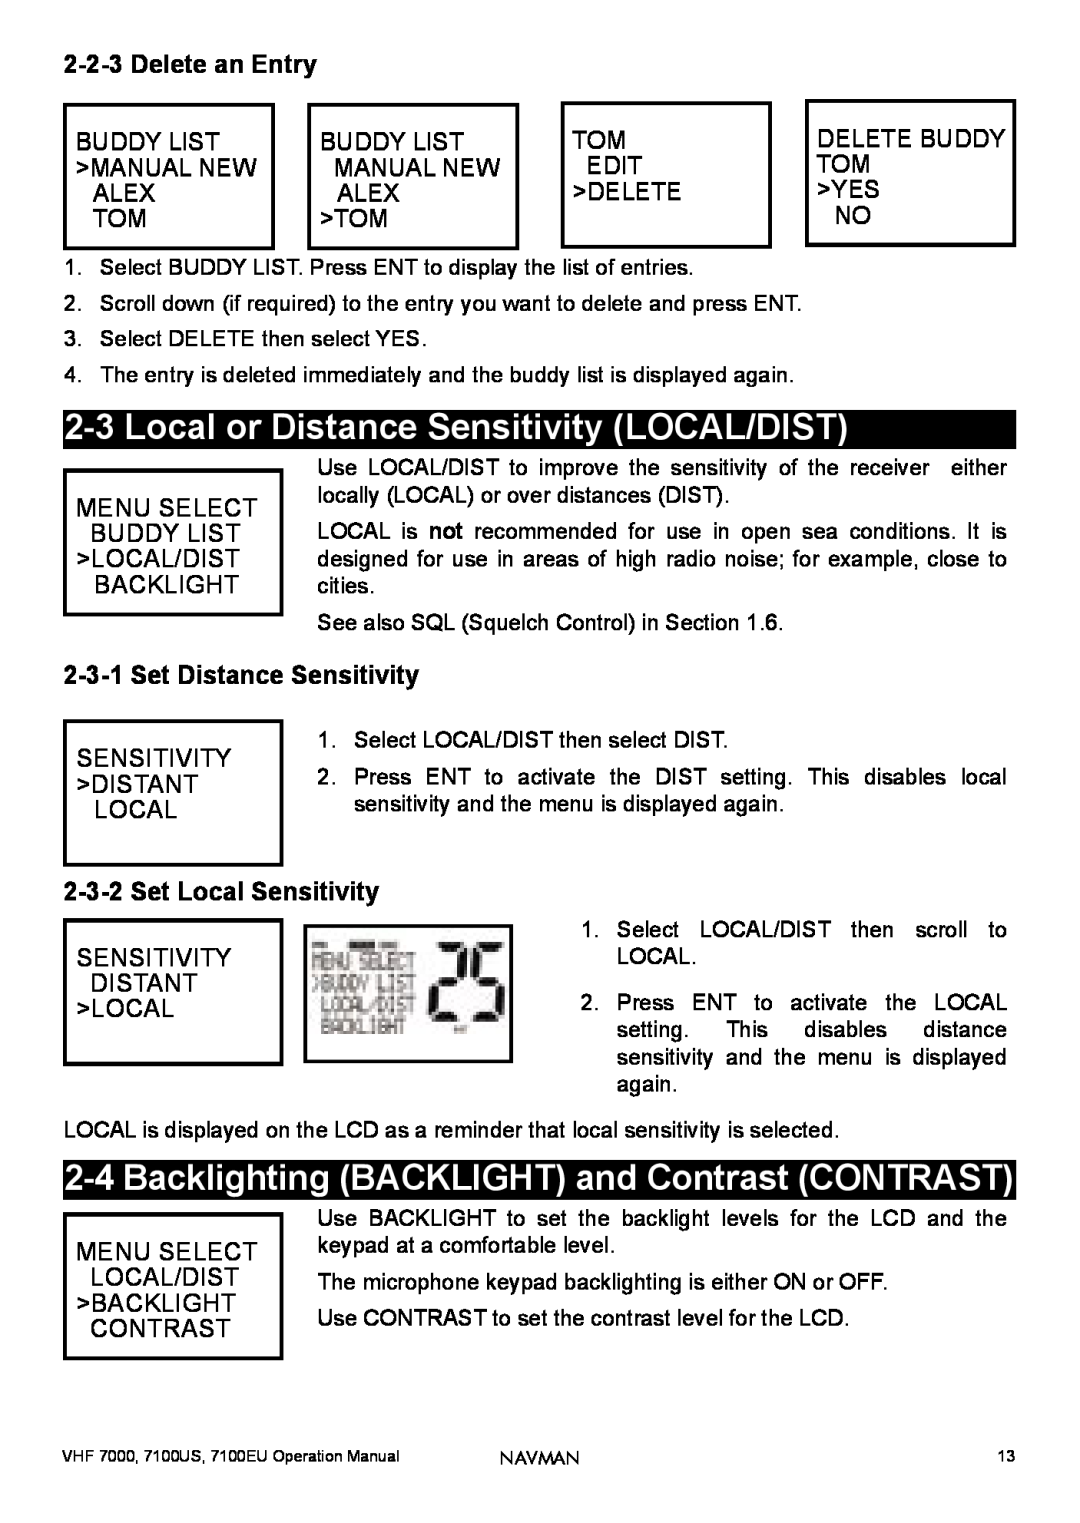 Navman 7000, 7100EU, 7100US 2-3Local or Distance Sensitivity LOCAL/DIST, 2-4Backlighting BACKLIGHT and Contrast CONTRAST 